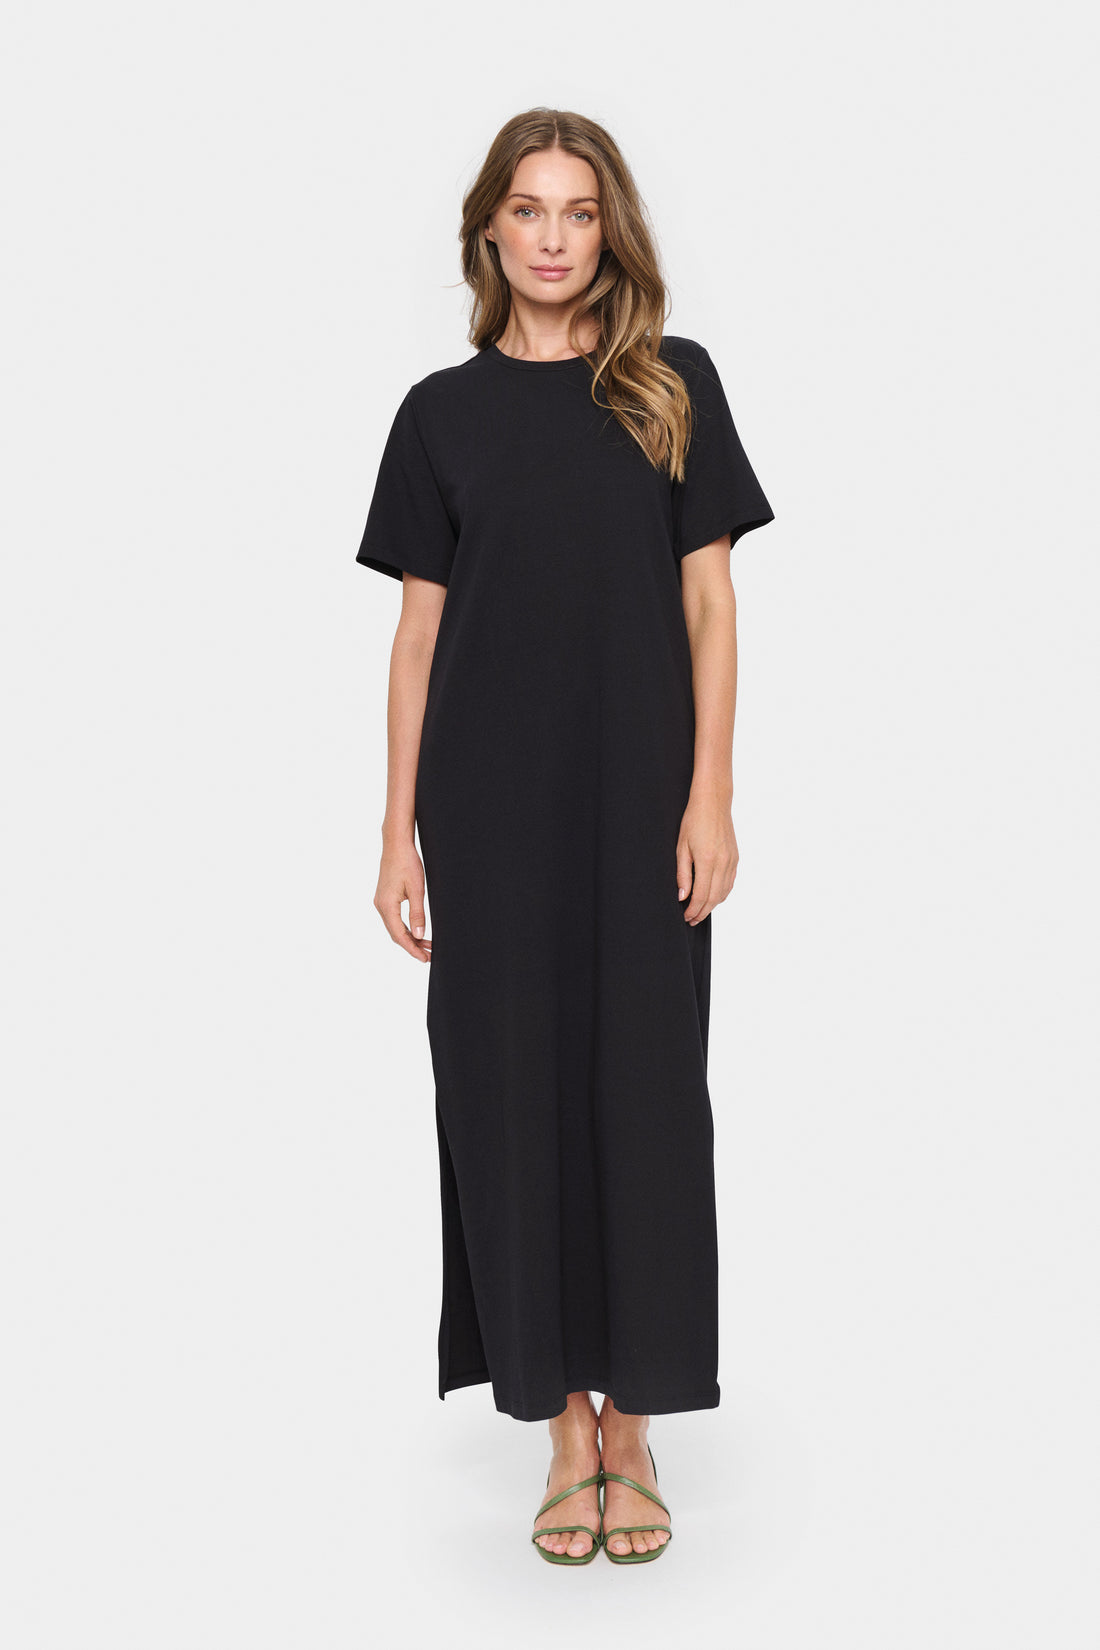 Saint Tropez Faria T-shirt Dress in Black